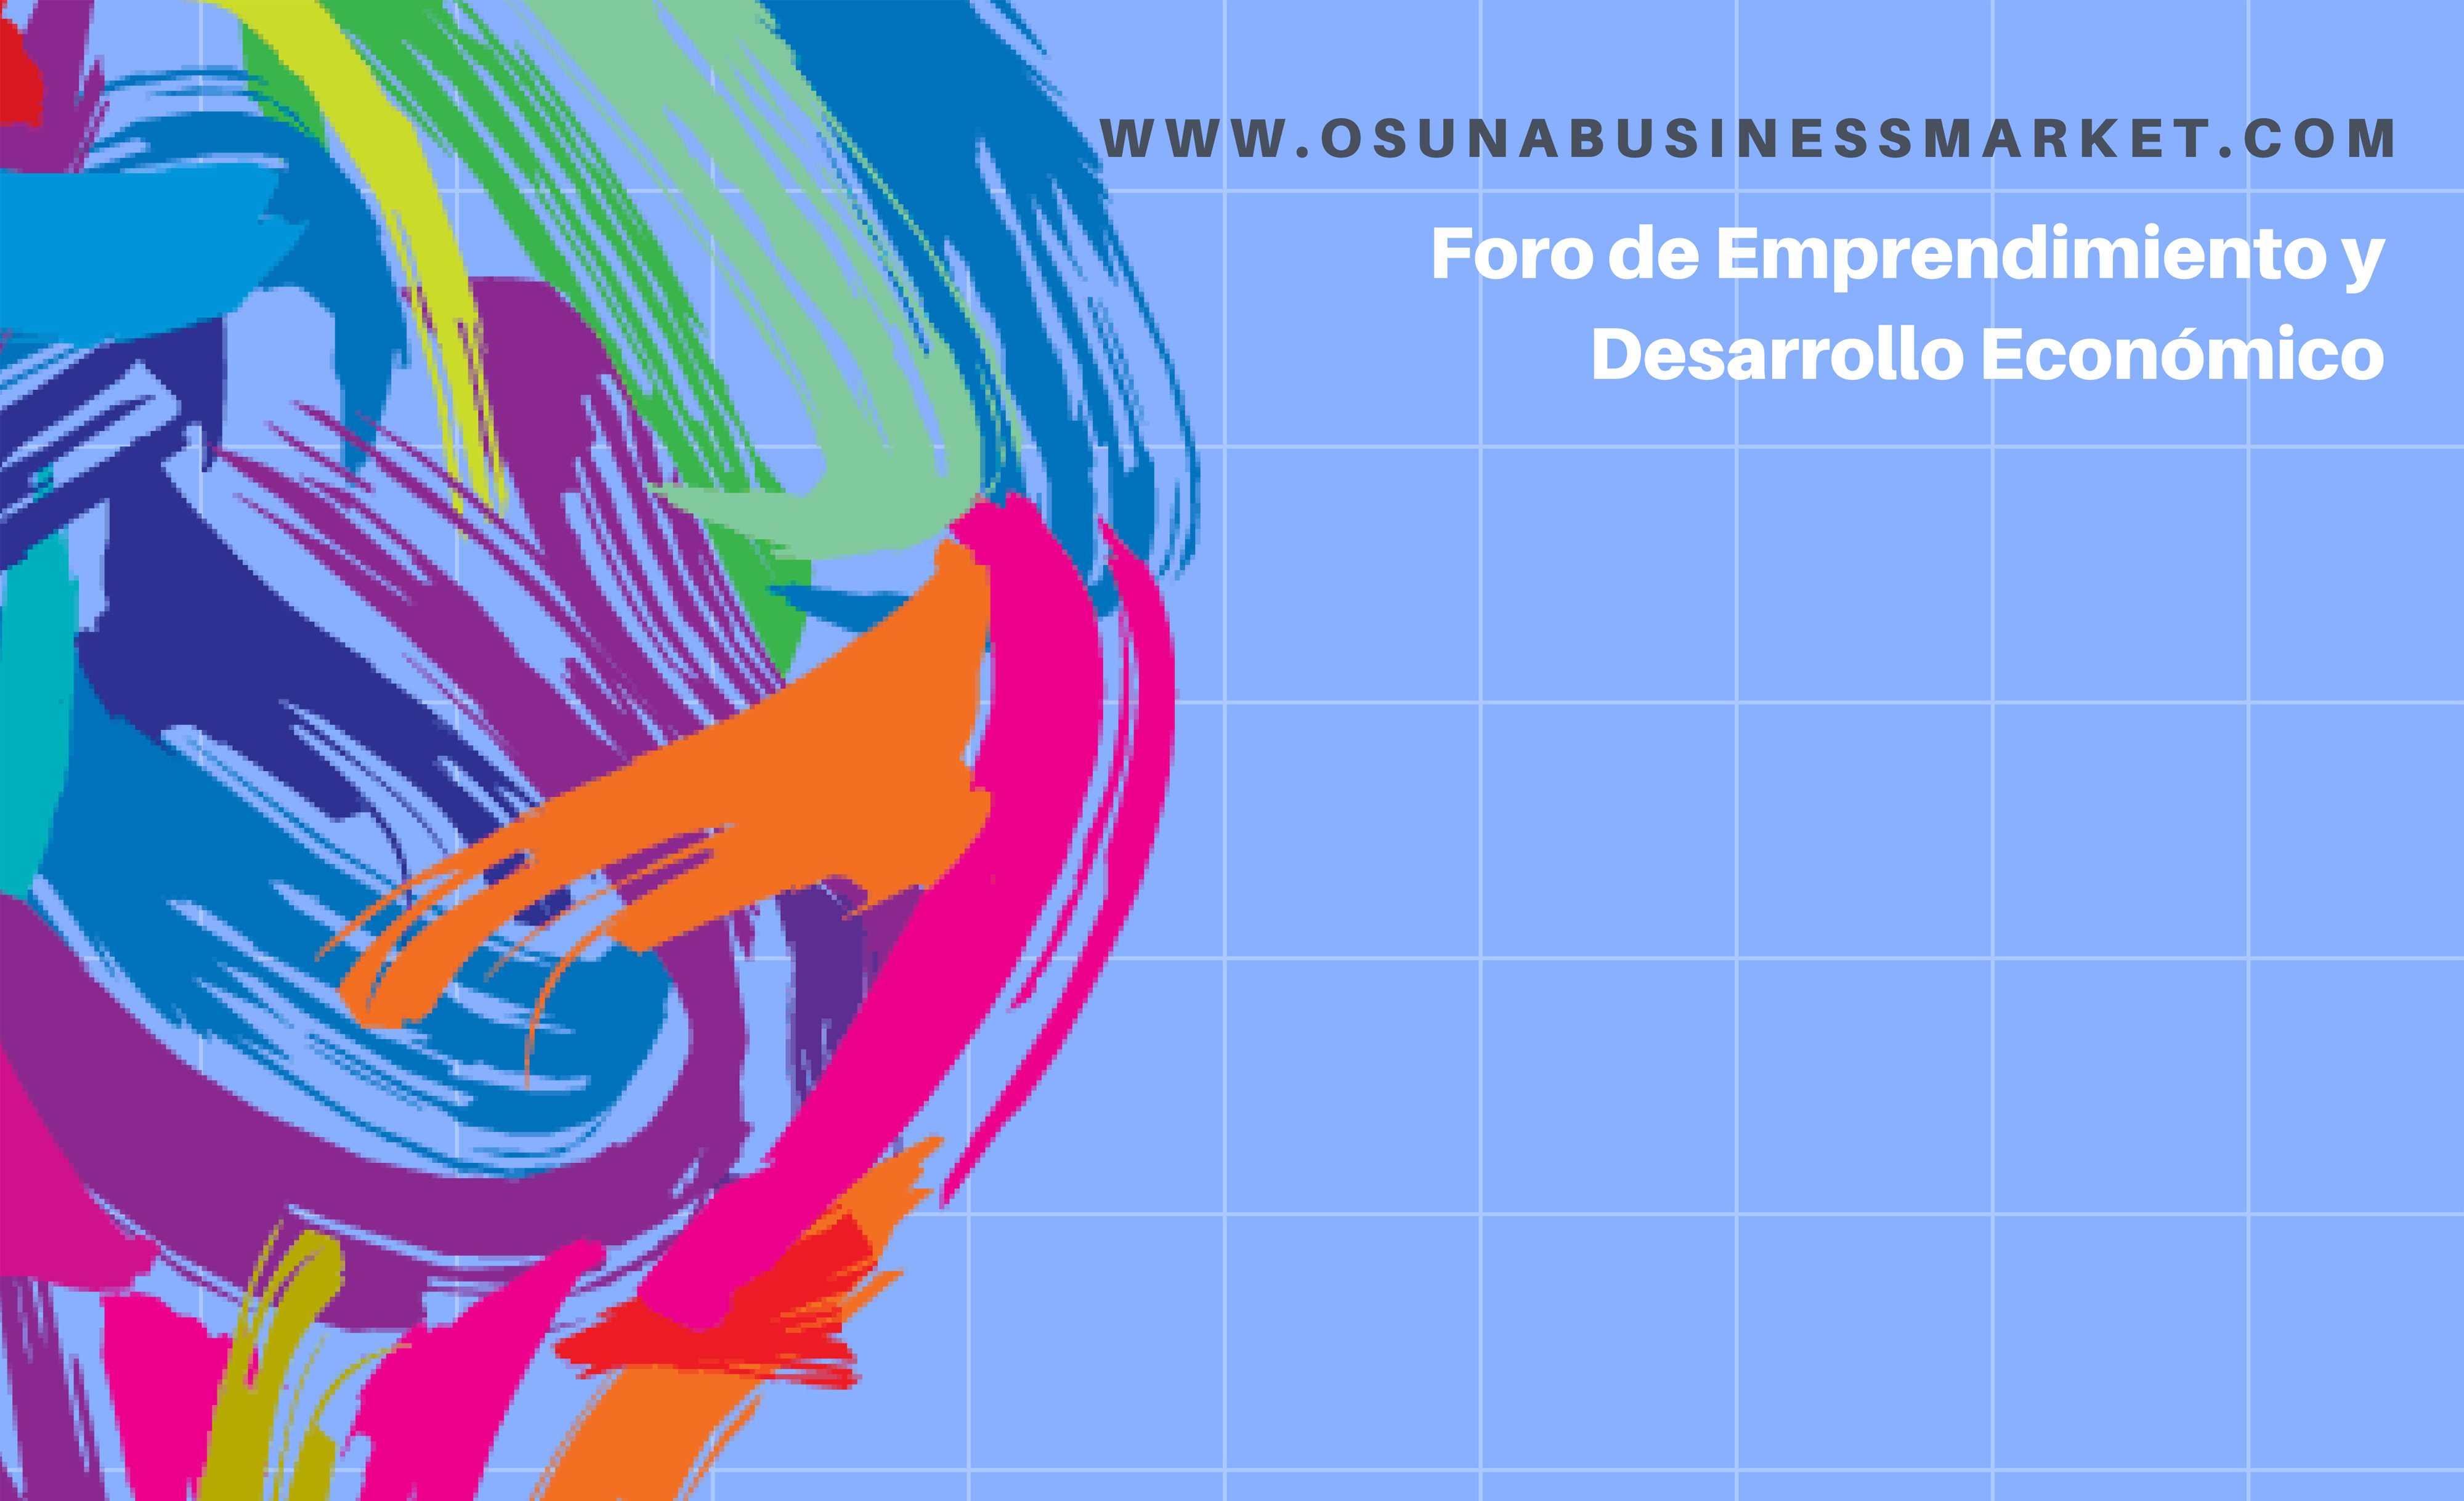 Osuna Business Market